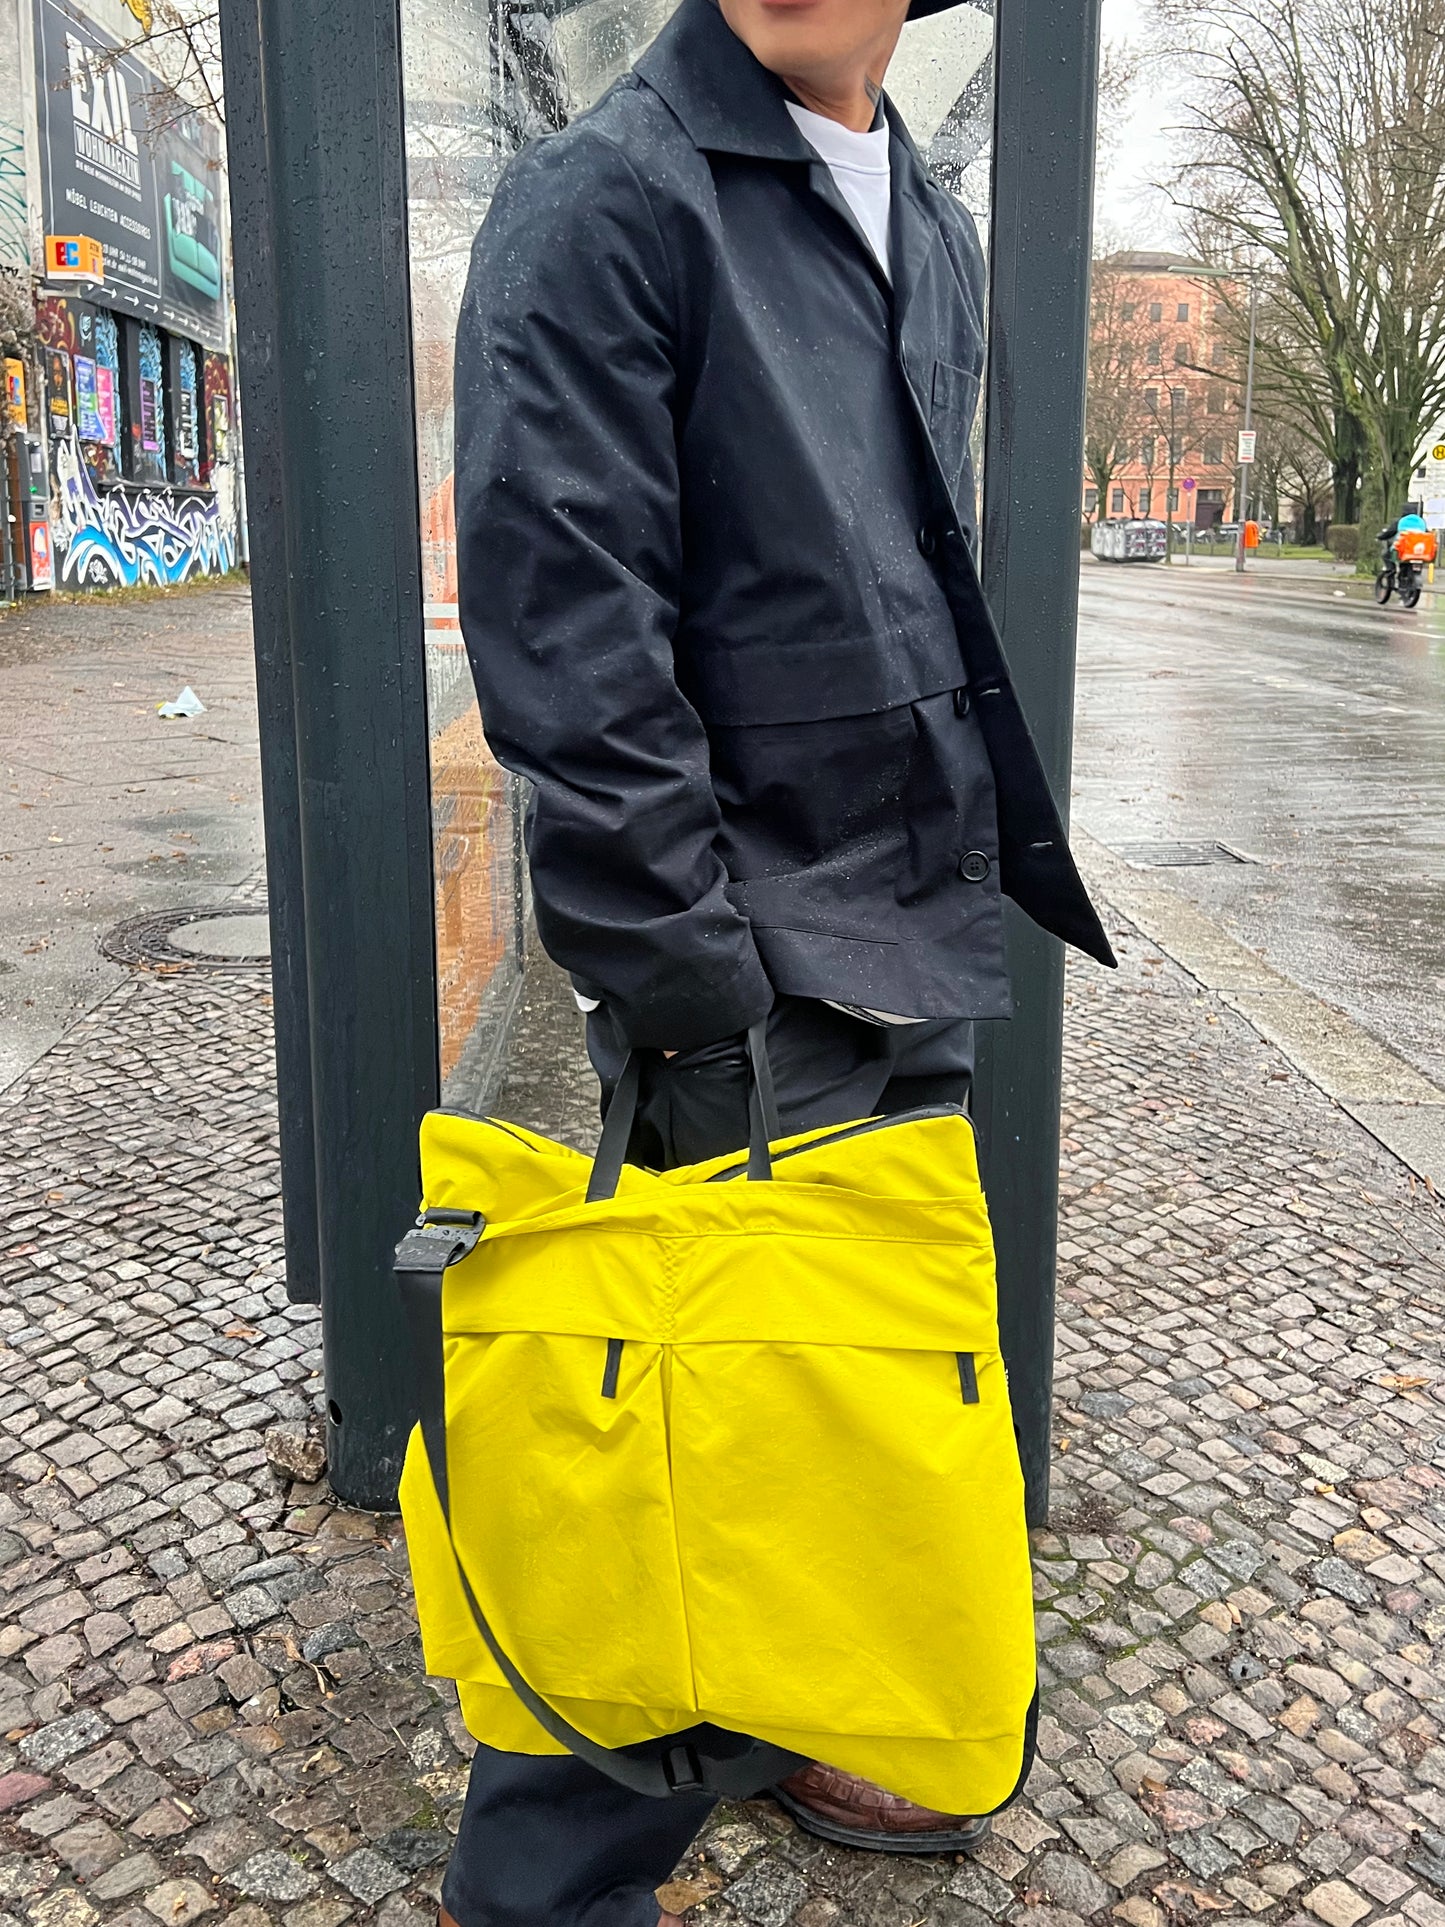 The Tote Bag yellow